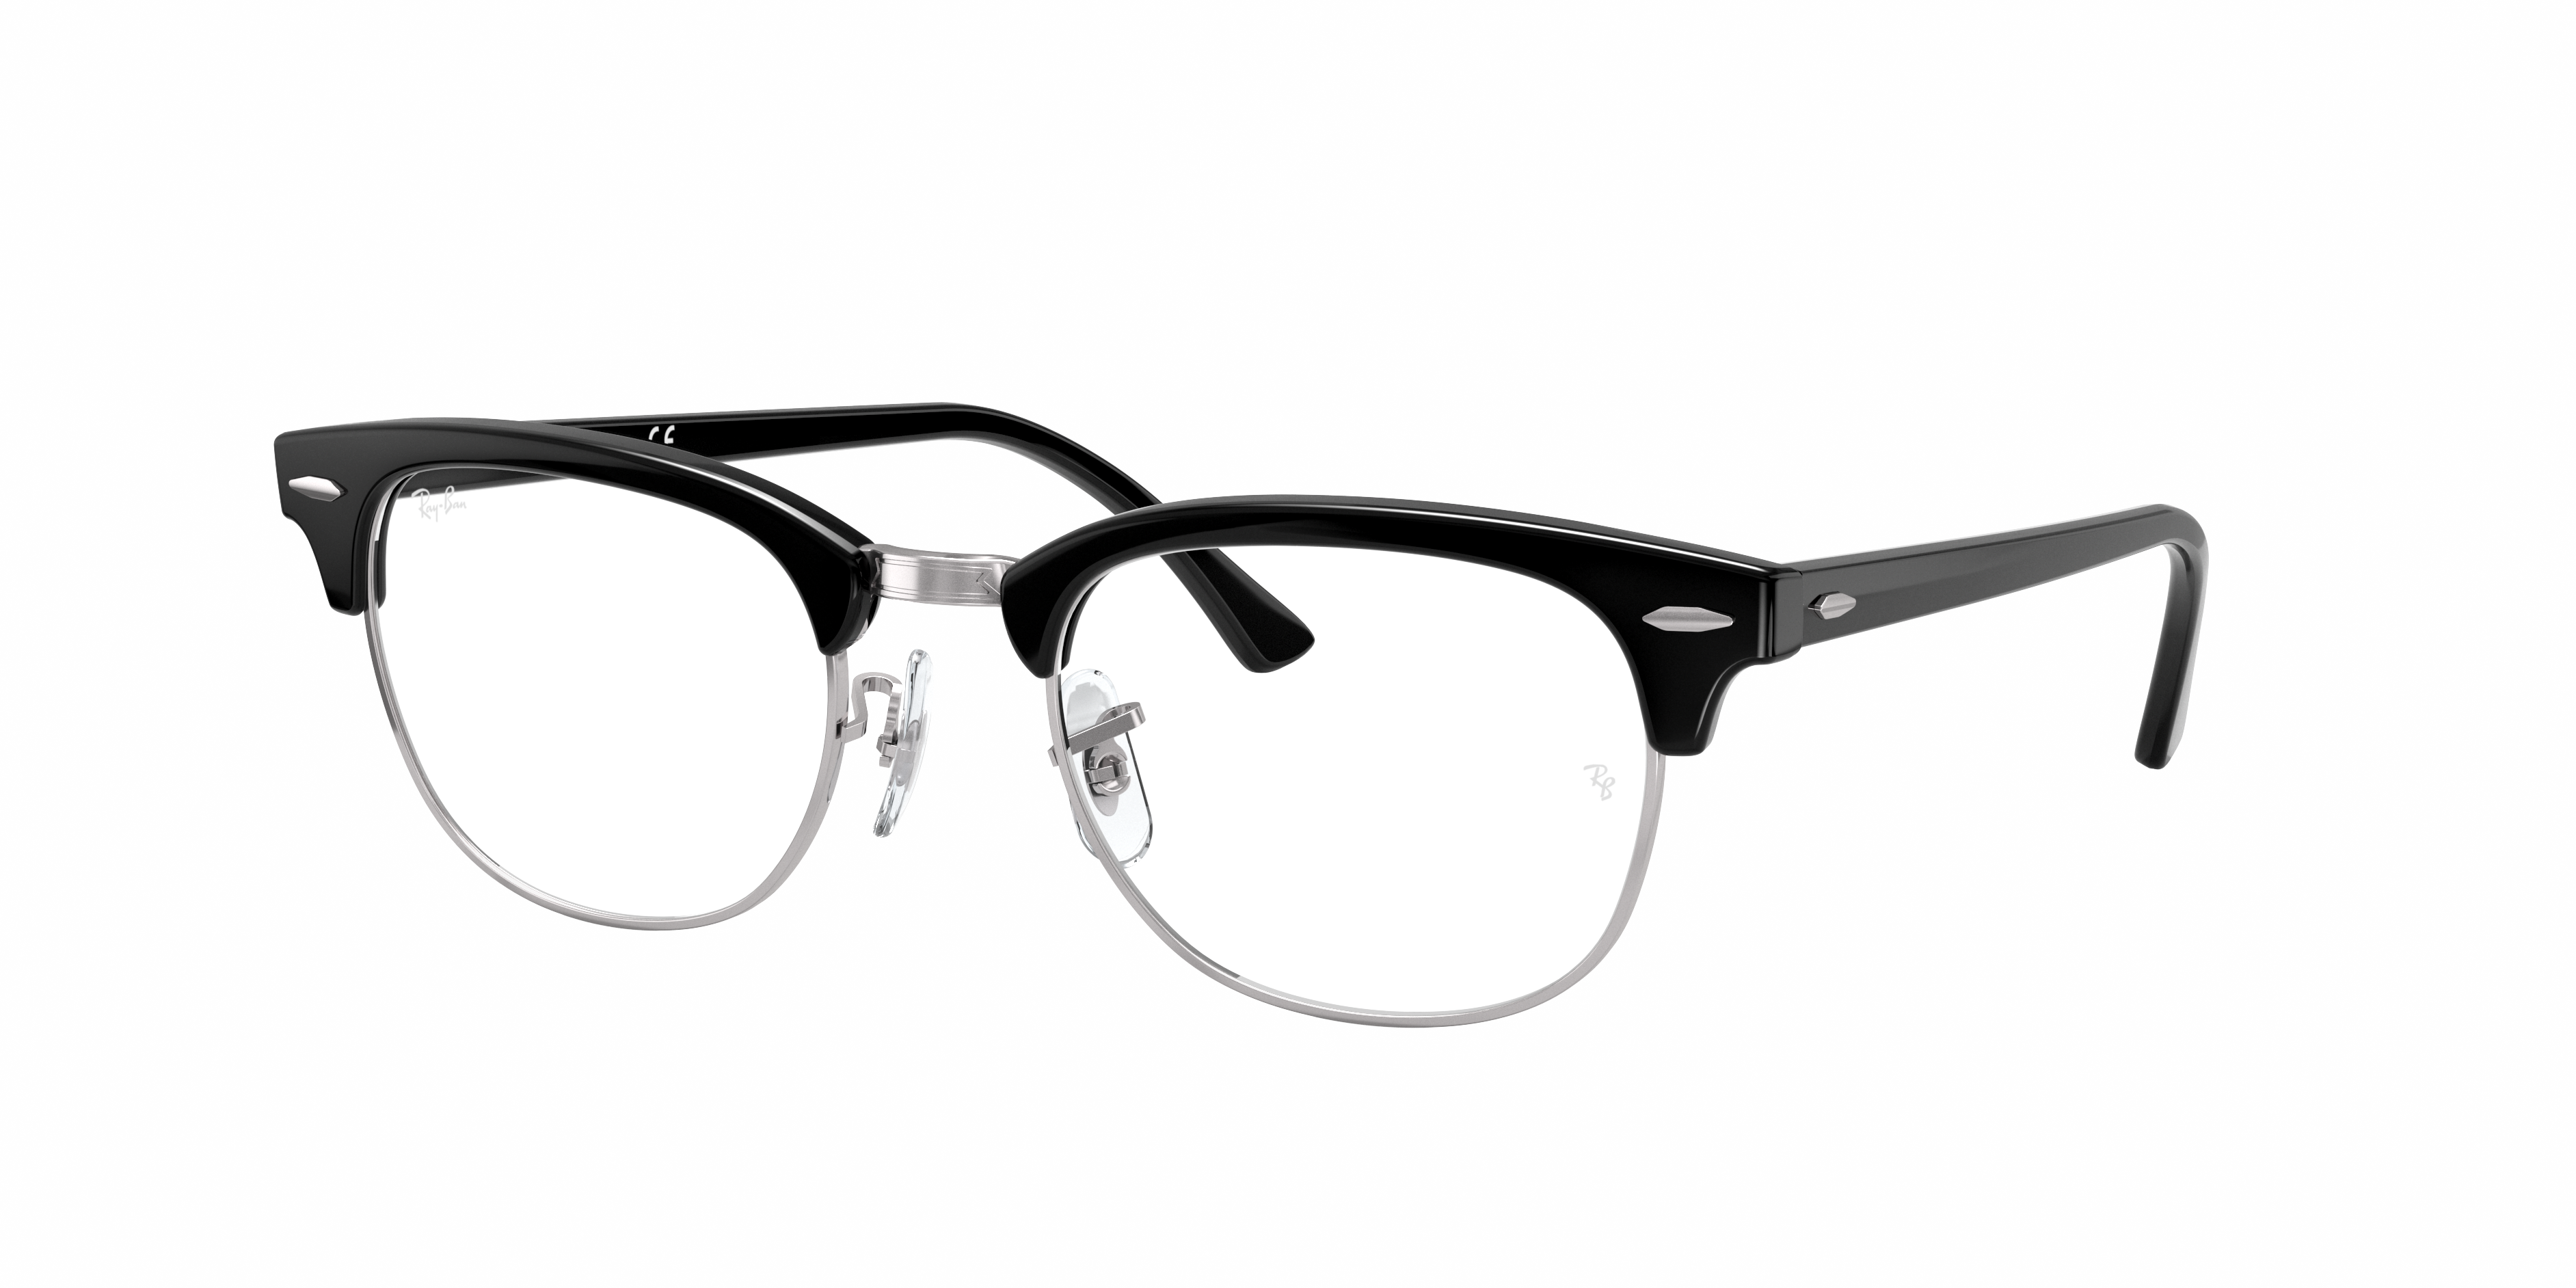 Ray Ban Prescription Glasses Clubmaster Optics Rb5154 Black Acetate 0rx Ray Ban Uk